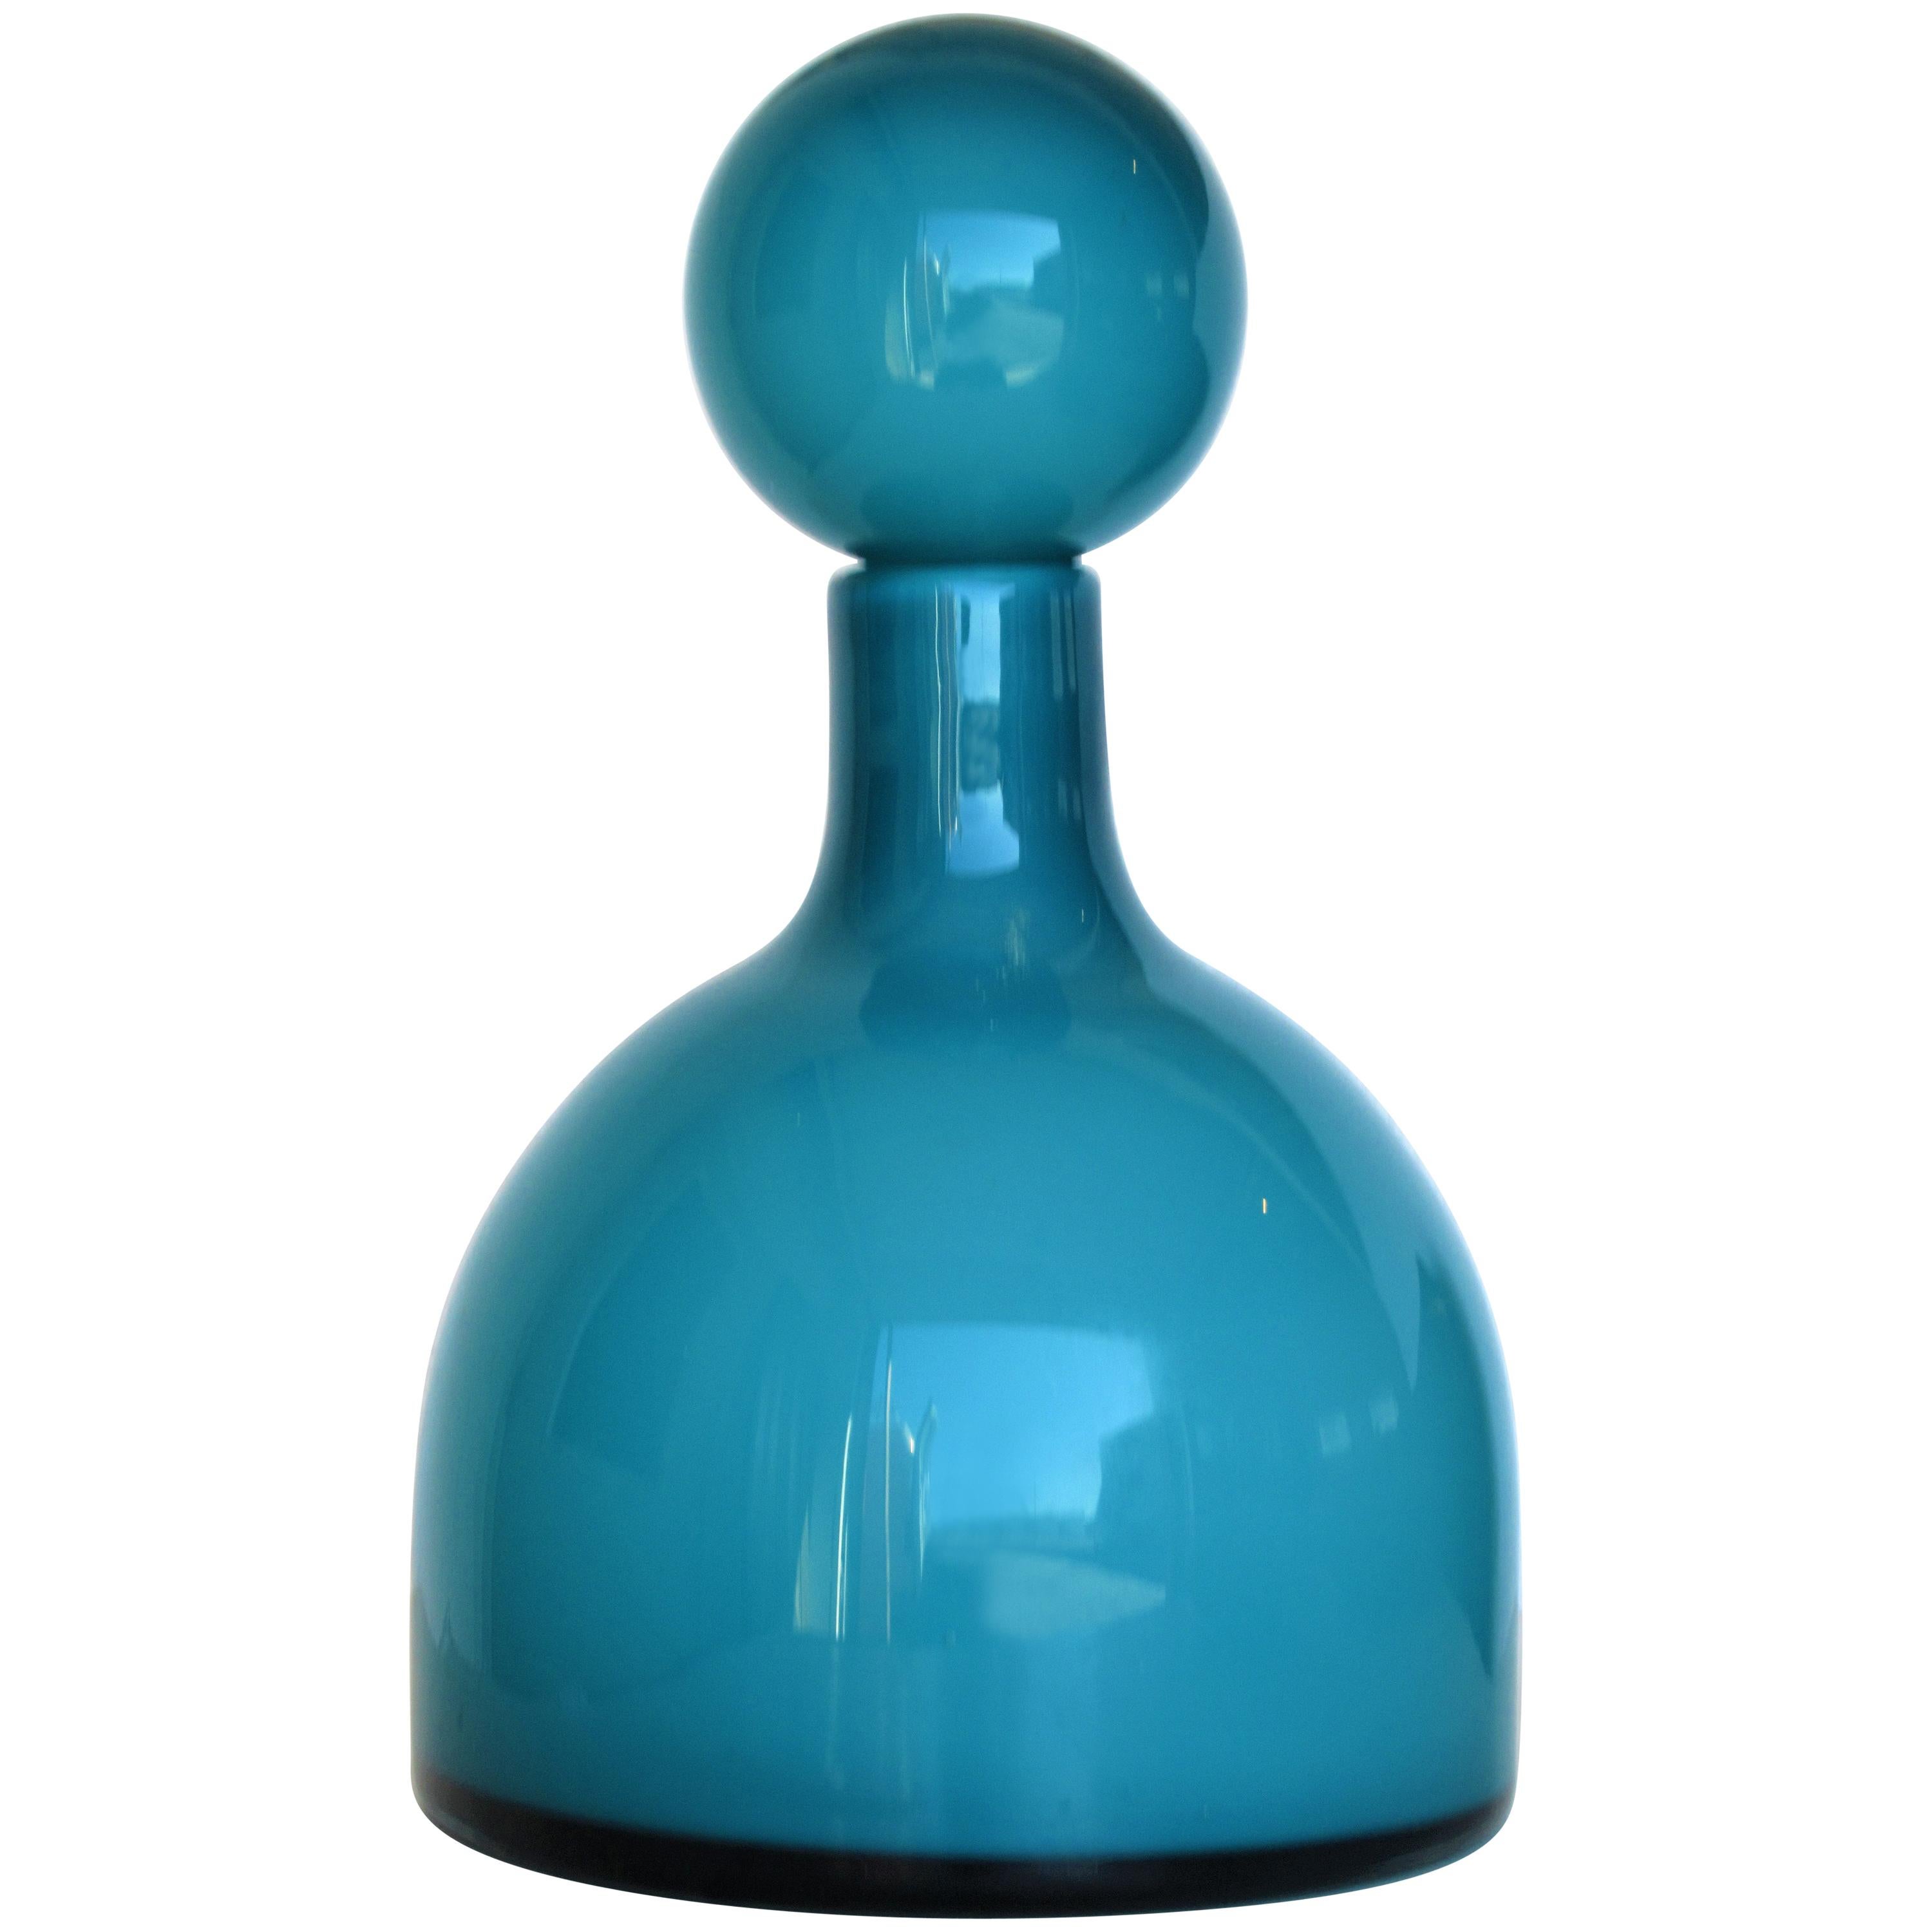  Mid 20th Century Modernist Cased Glass Decanter Bottle